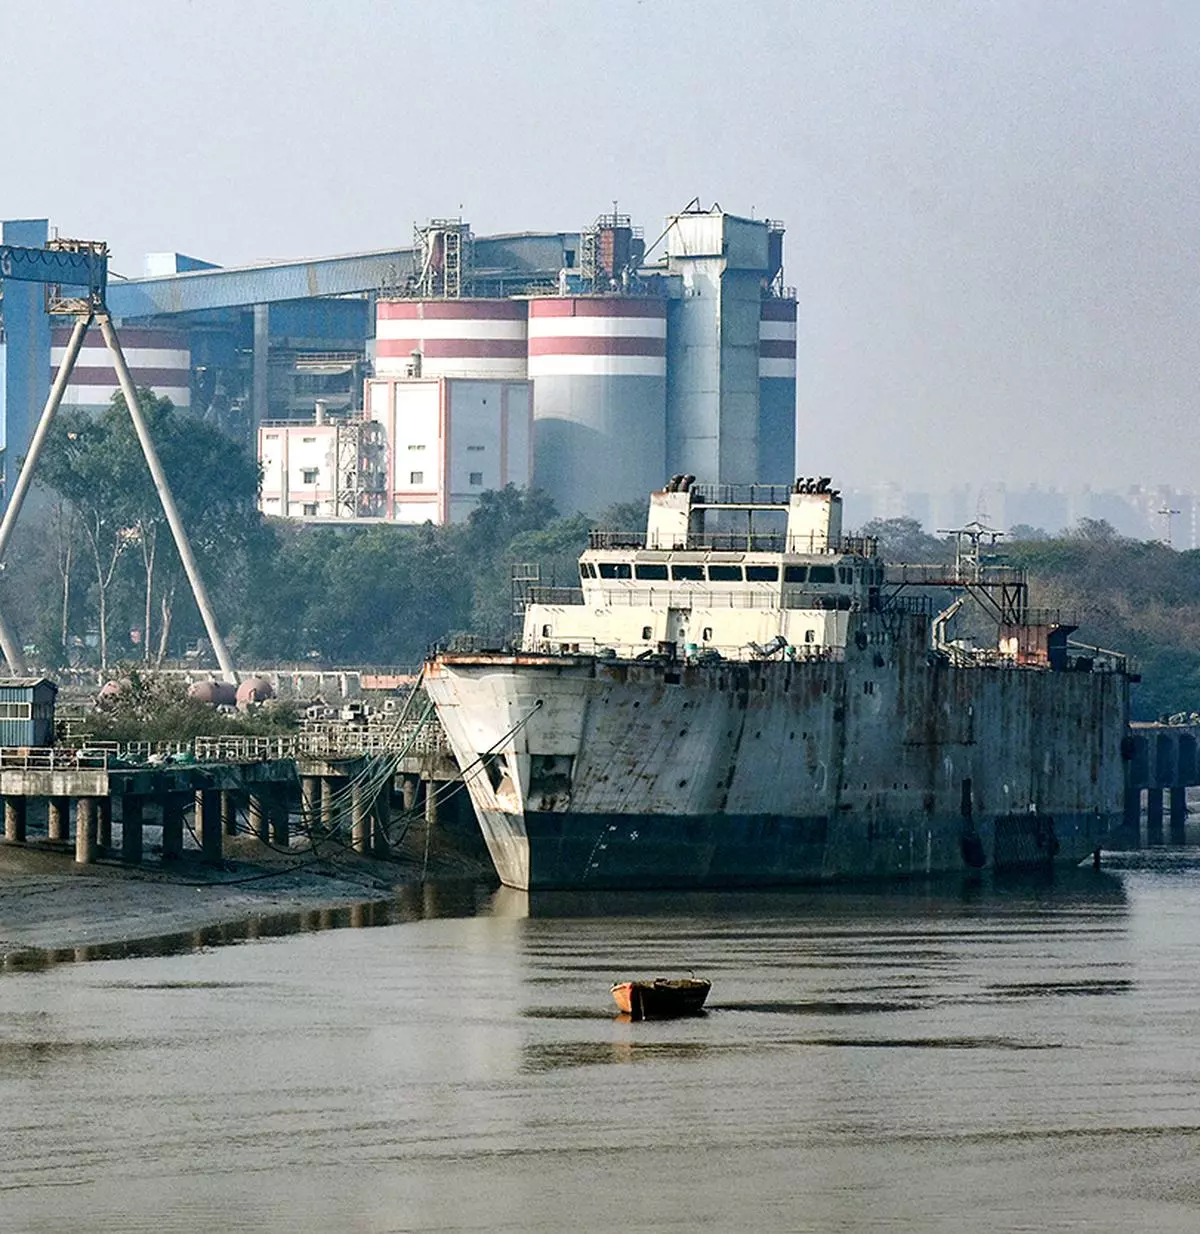 ABG shipyard in Mumbai